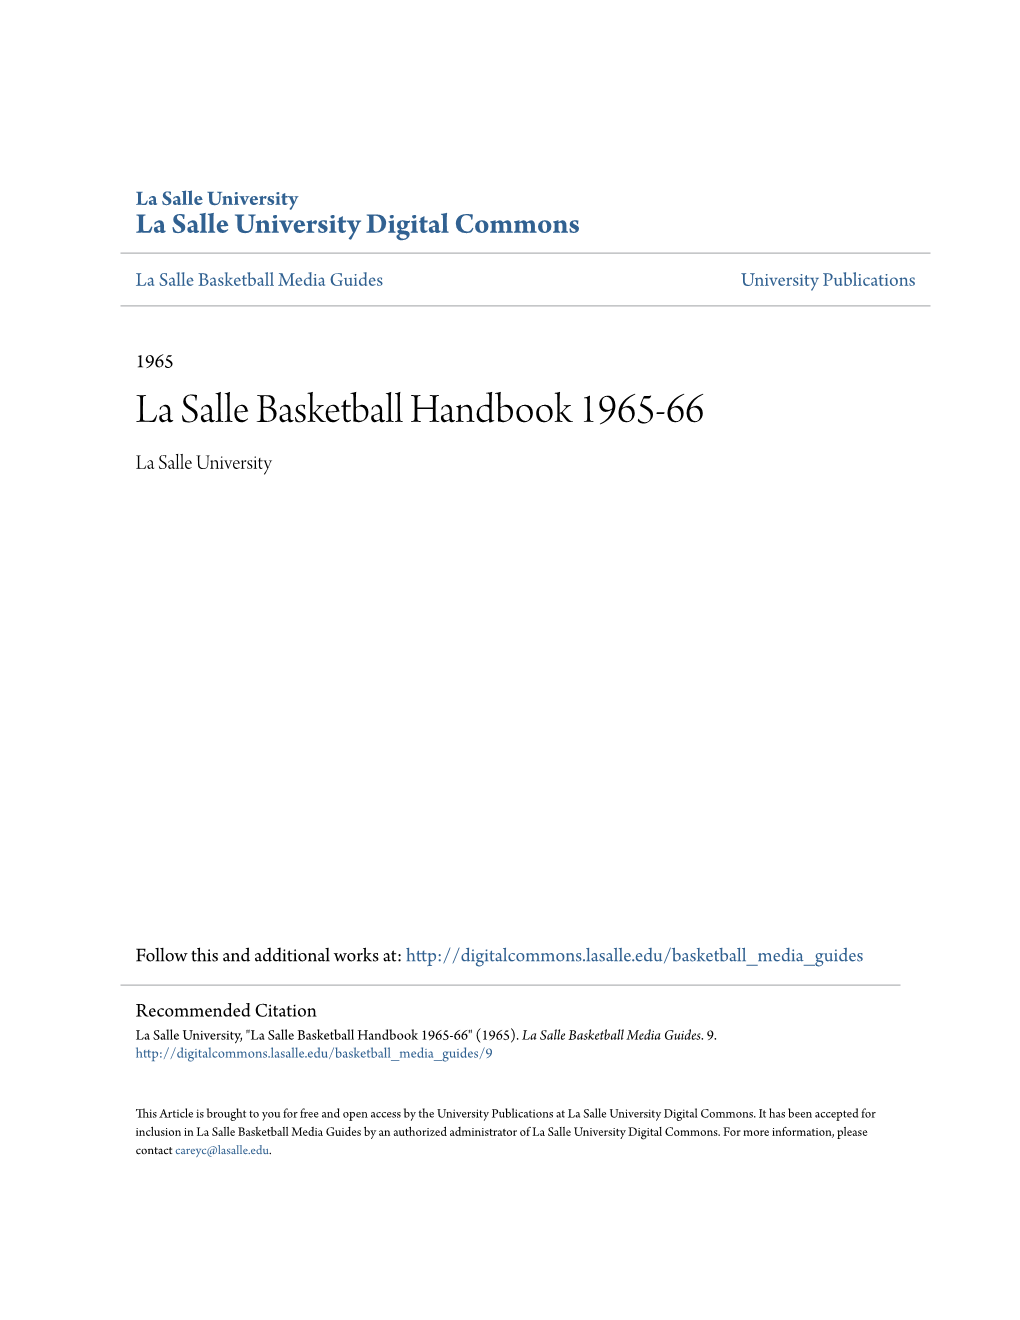 La Salle Basketball Handbook 1965-66 La Salle University